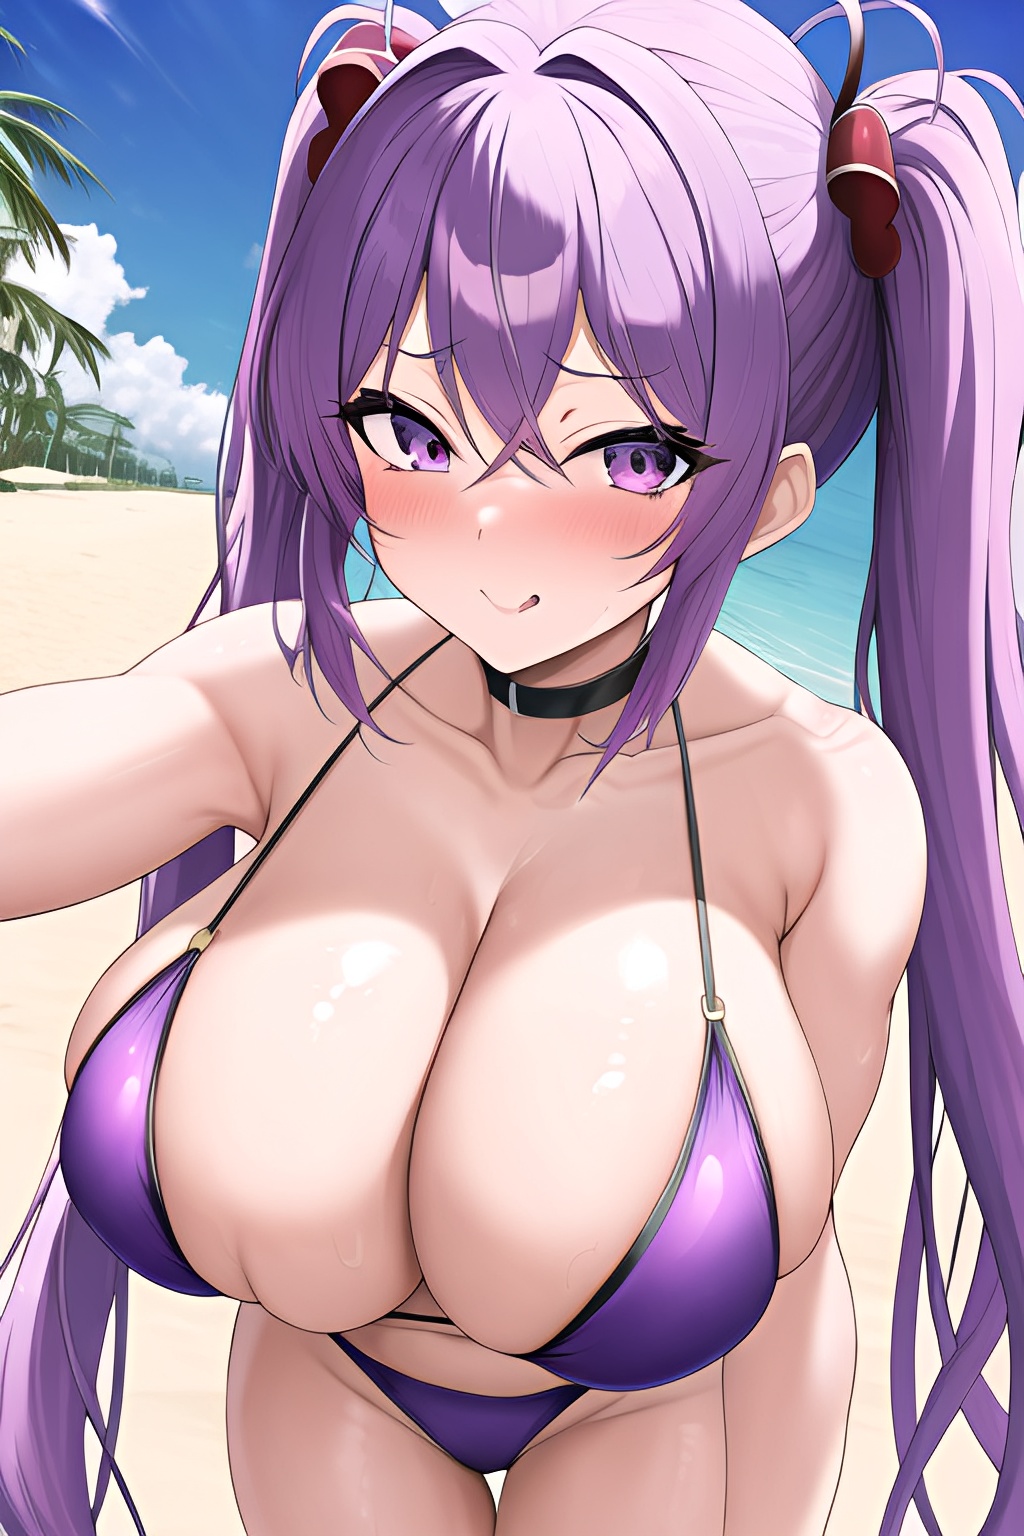 50s Hair Porn - Anime Muscular Huge Boobs 50s Age Ahegao Face Purple Hair Pigtails Hair  Style Light Skin Comic Beach Close Up View T Pose Teacher  3664725085317170550 - AI Hentai